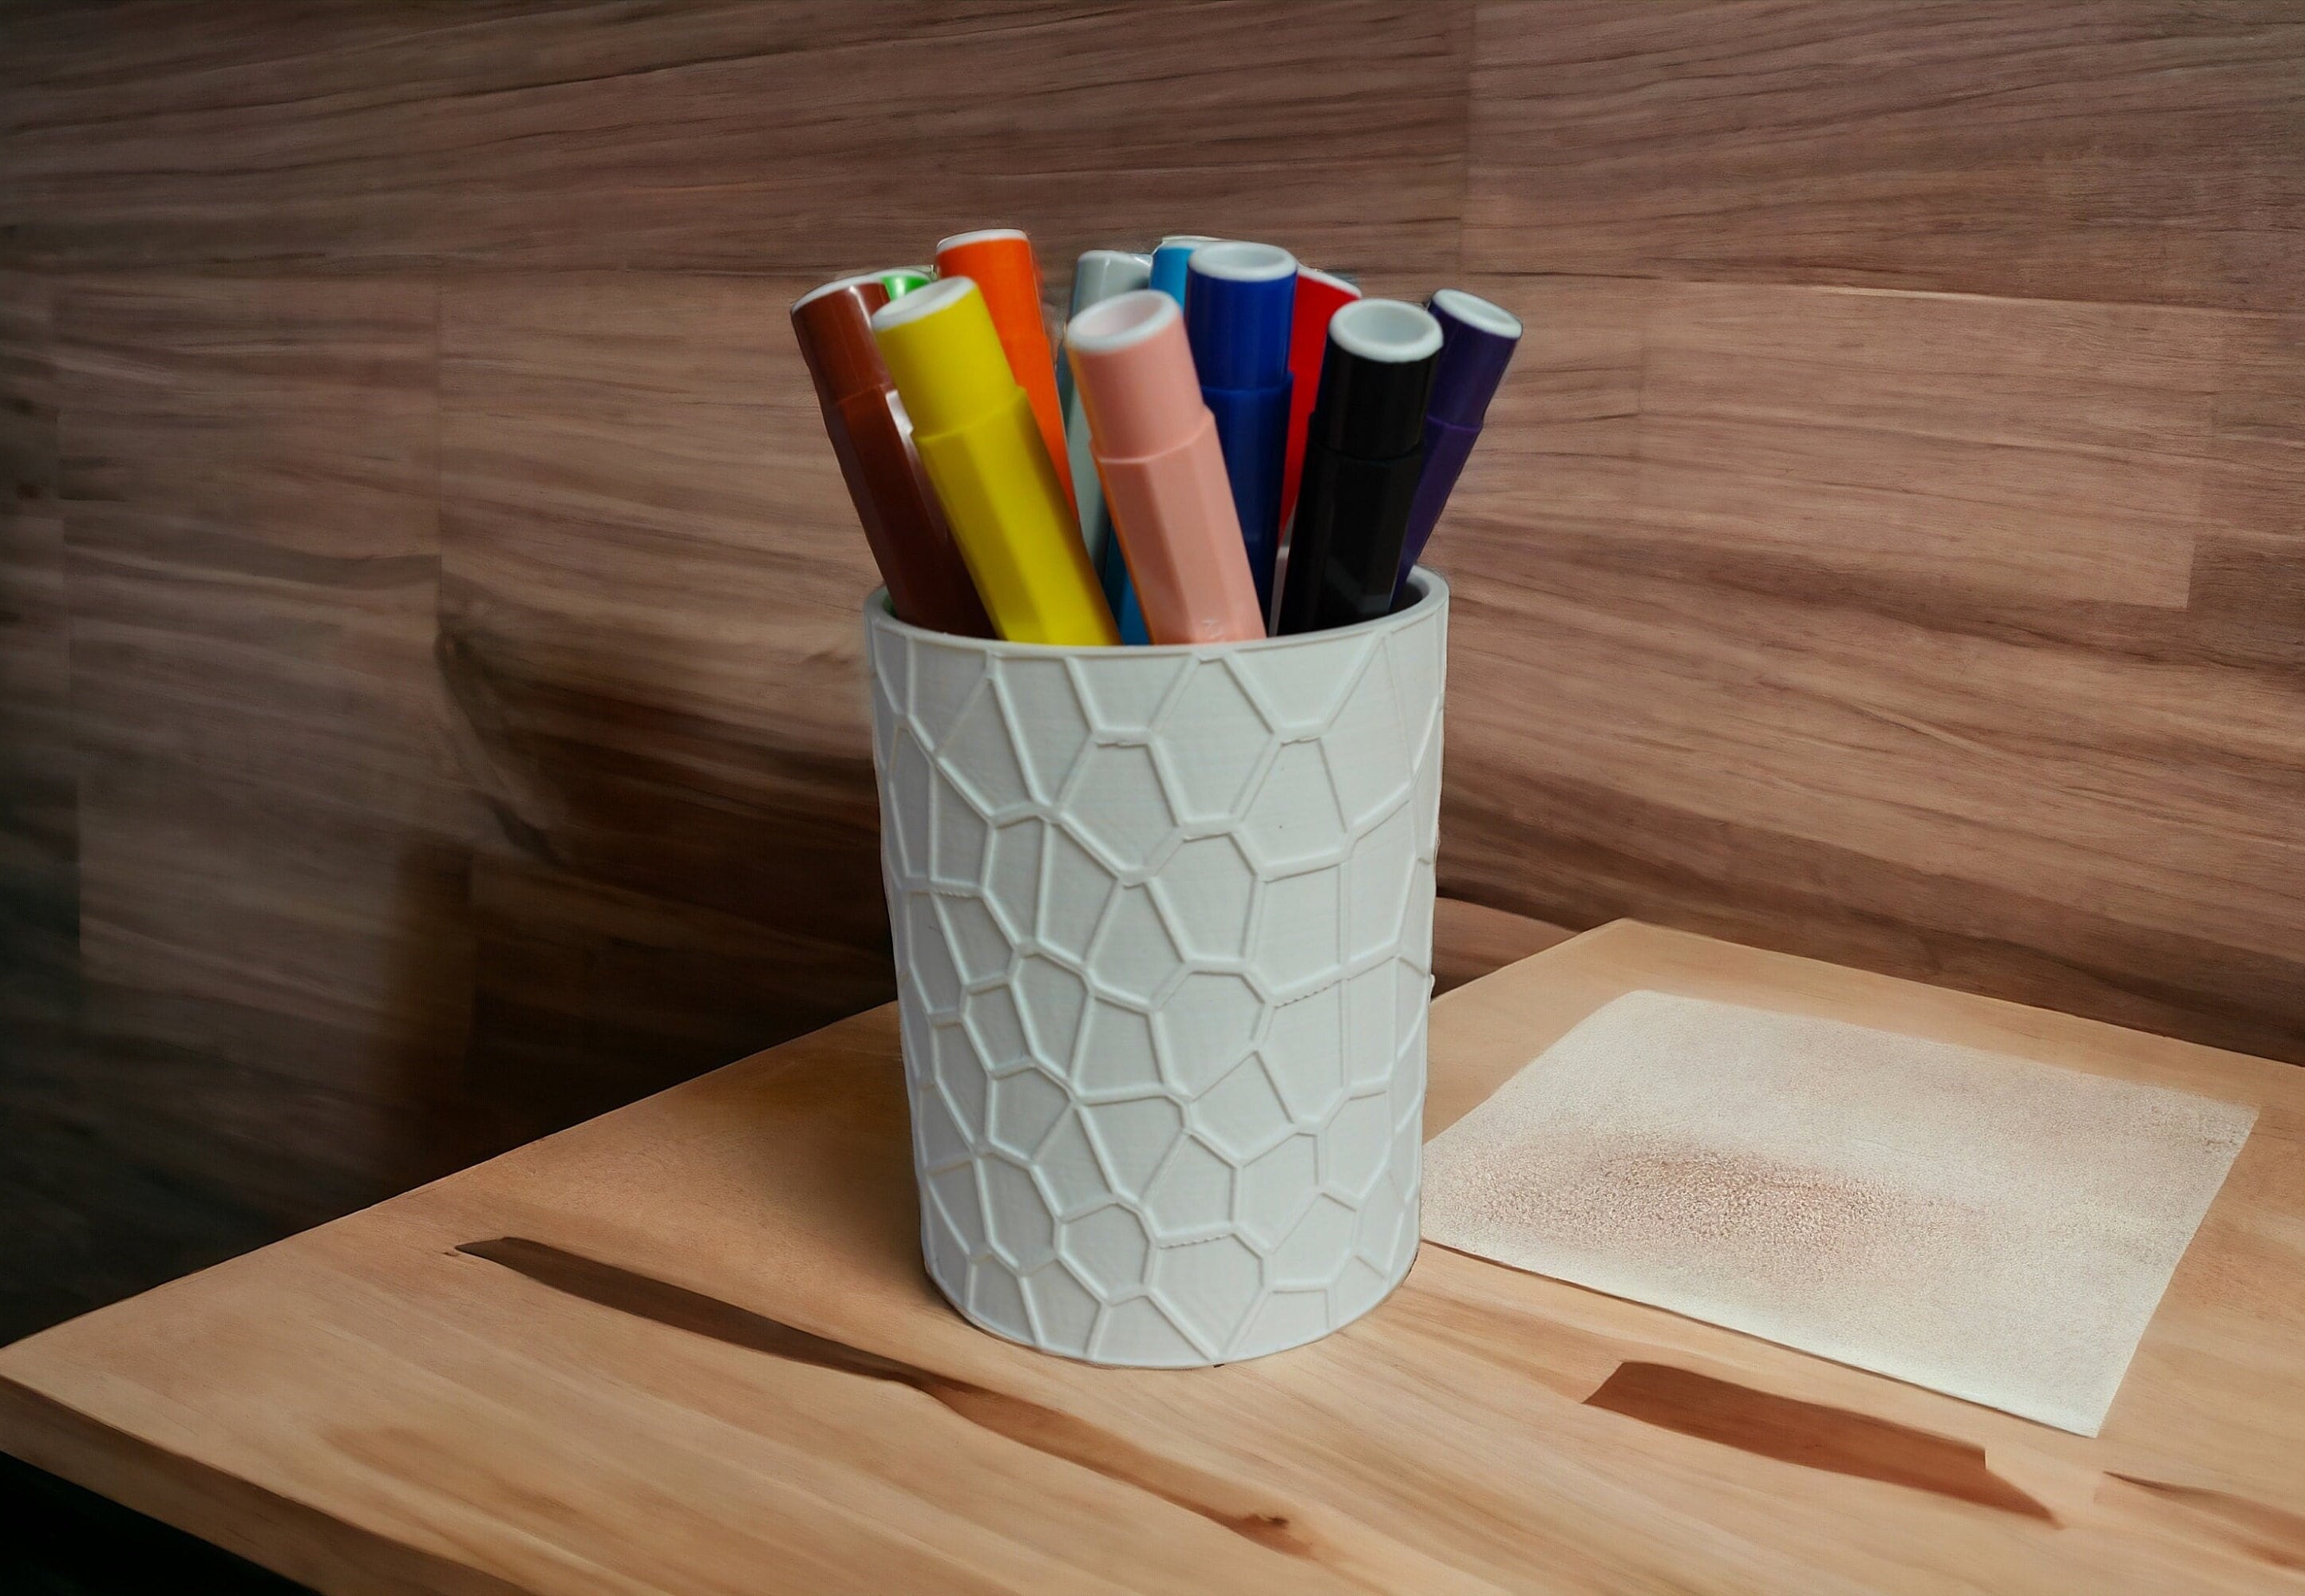 Portapenne da scrivania pelle design Colorful Pen Holder DUDU